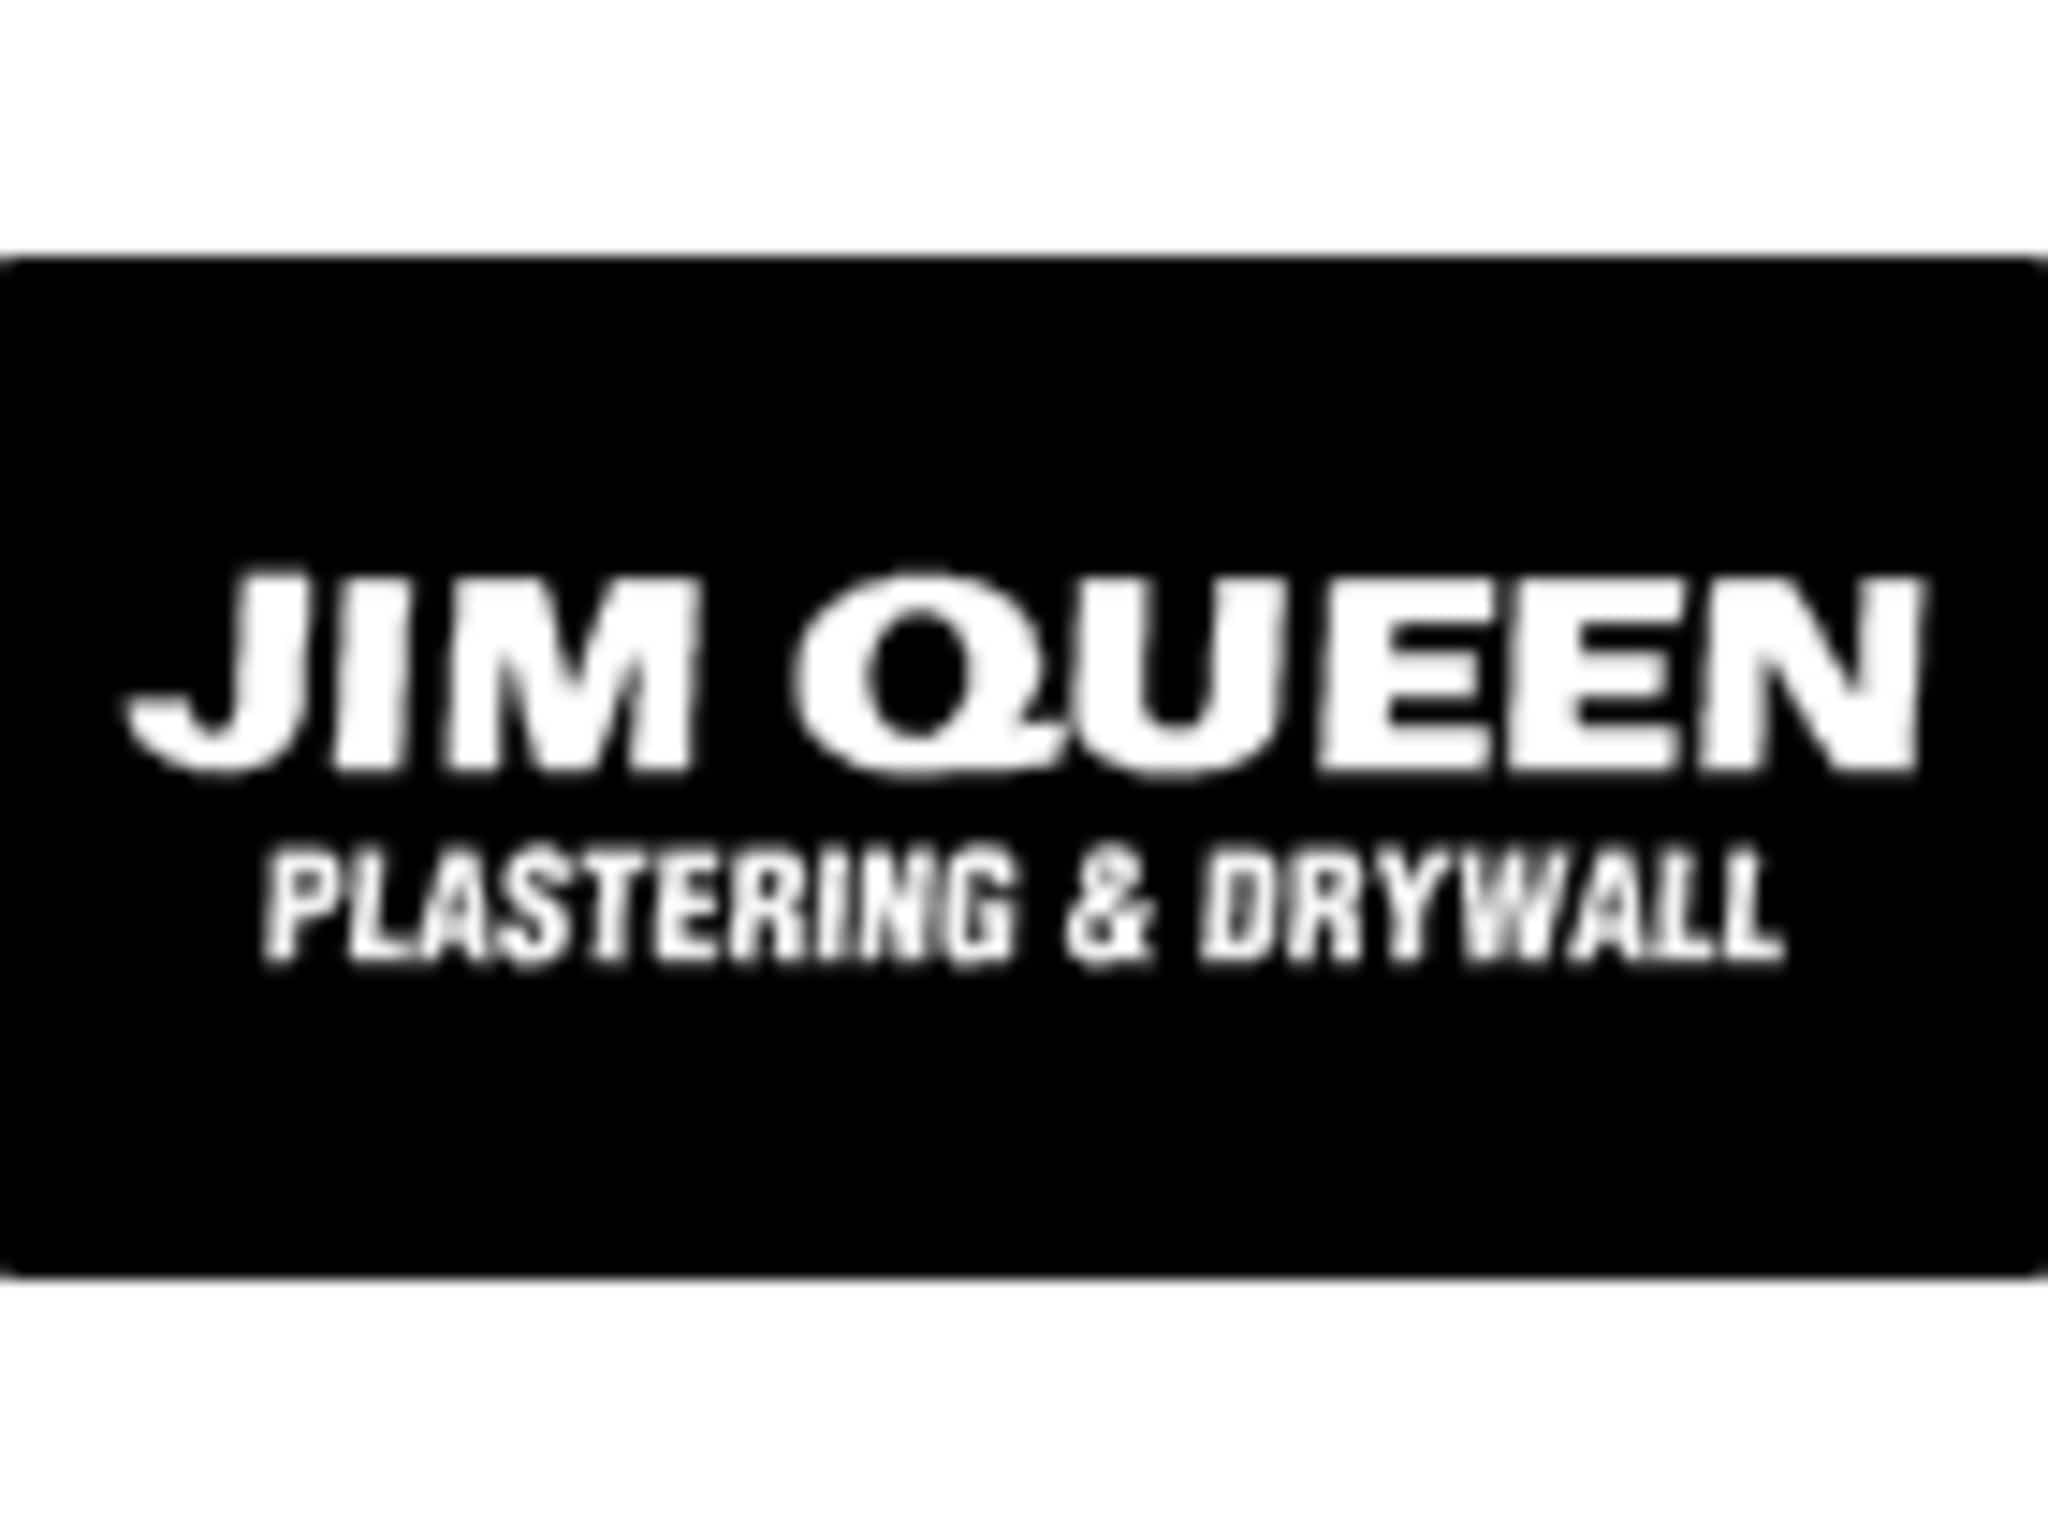 photo Queen Jim Plastering & Drywall